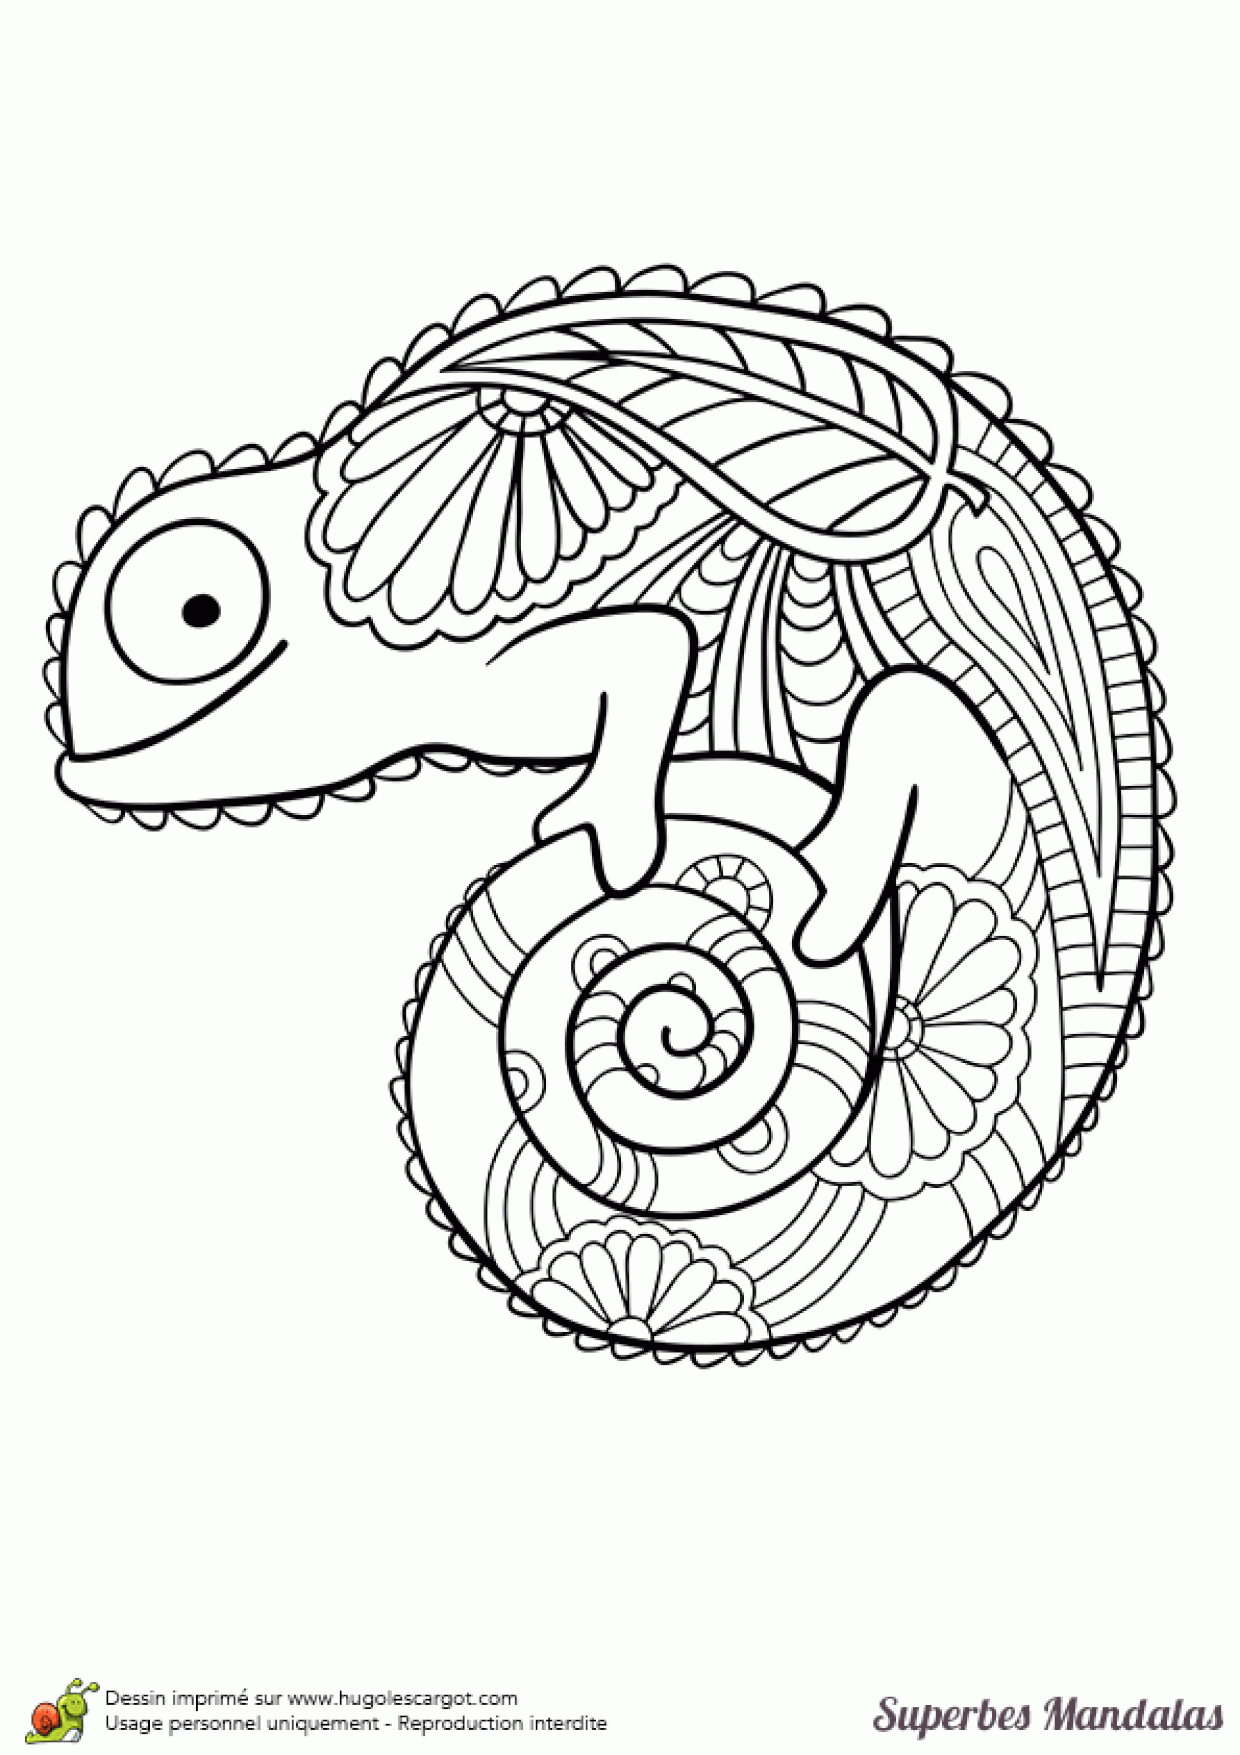 Coloriage D&amp;#039;un Superbe Mandala En Forme De Caméléon concernant Hugo L Escargot Coloriage Mandala 